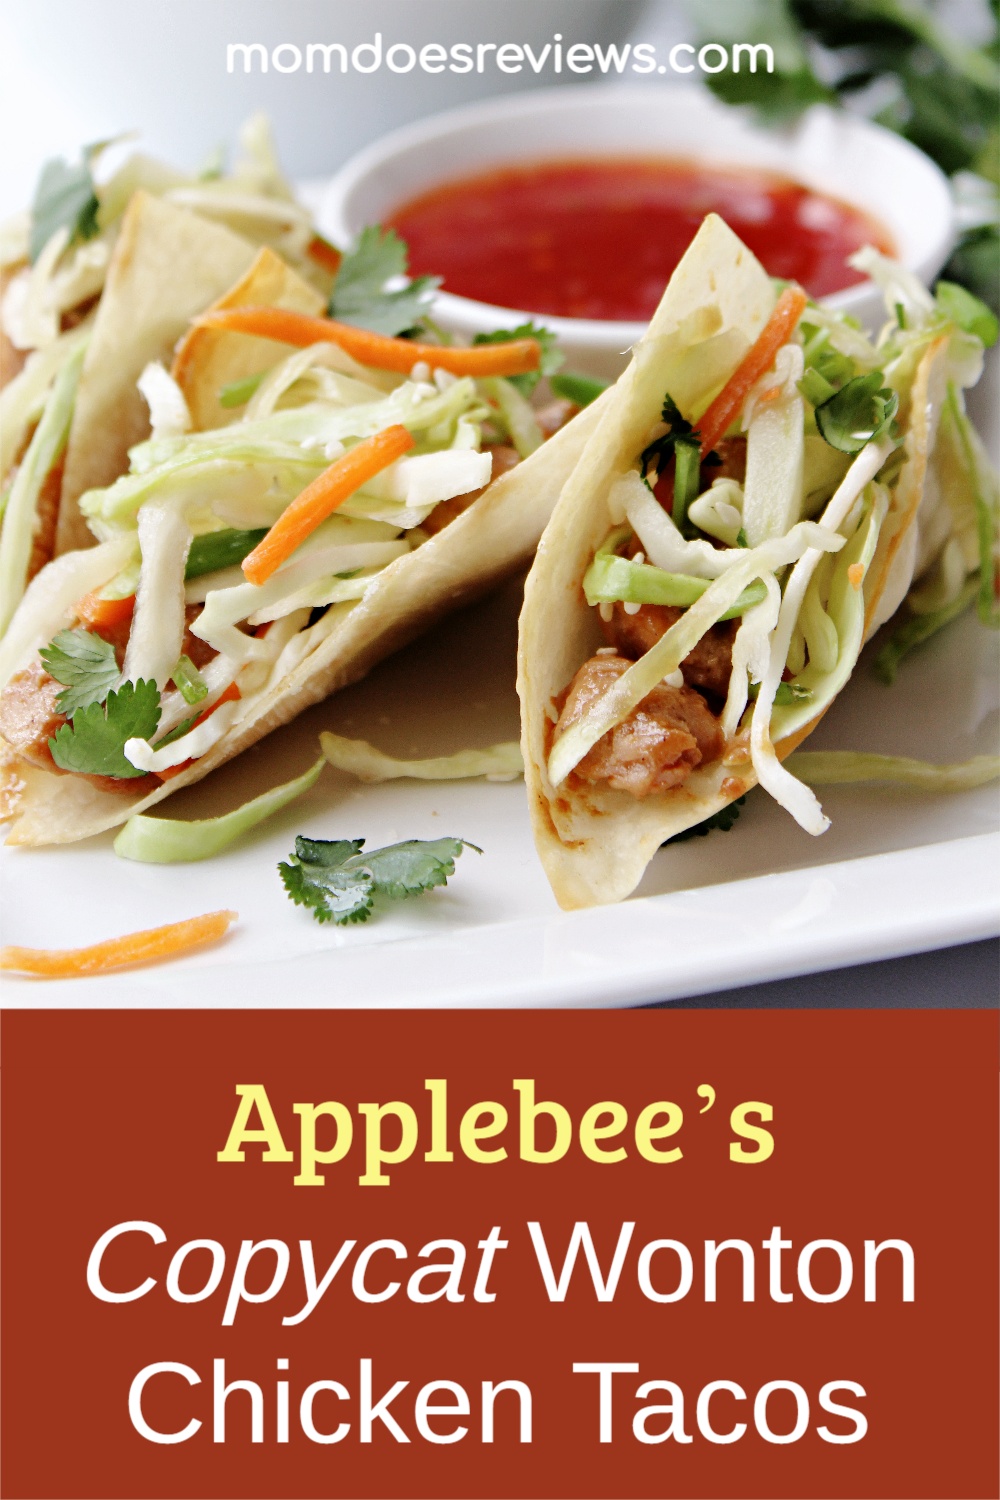 Applebee’s Copycat Wonton Chicken Tacos Recipe